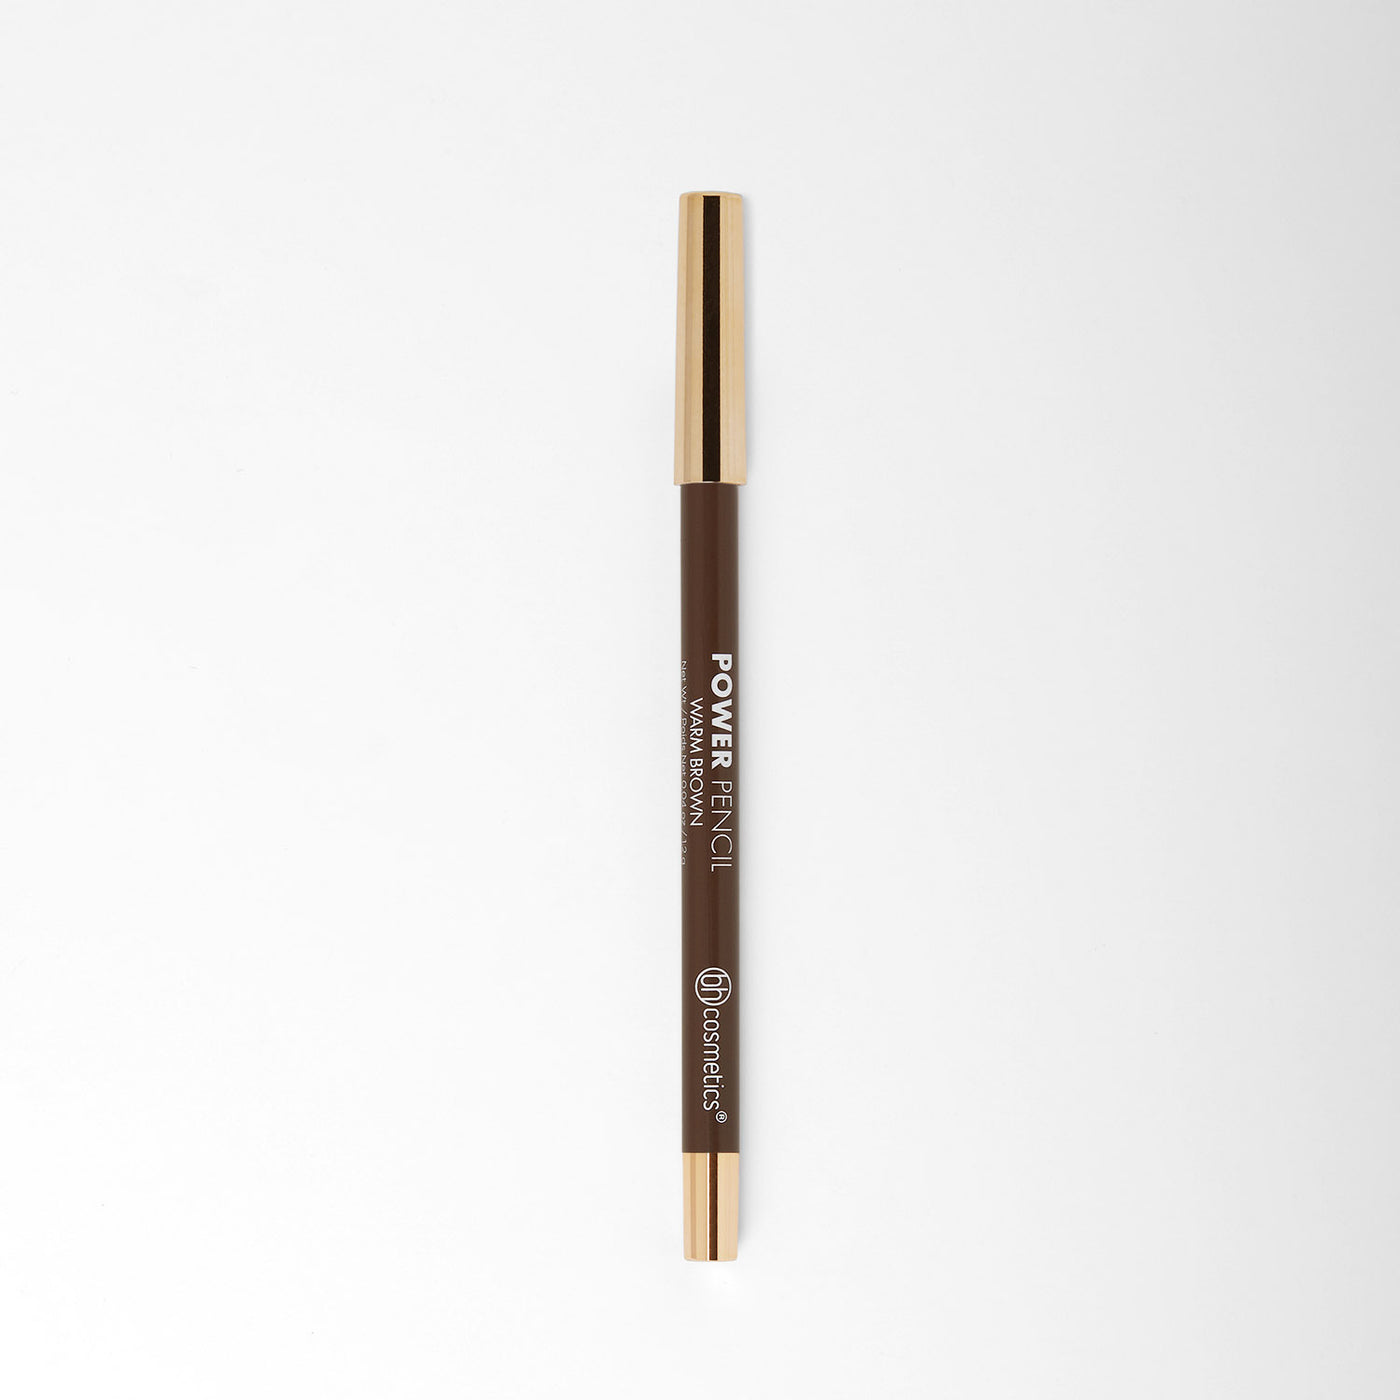 Power pencil in warm brown colour